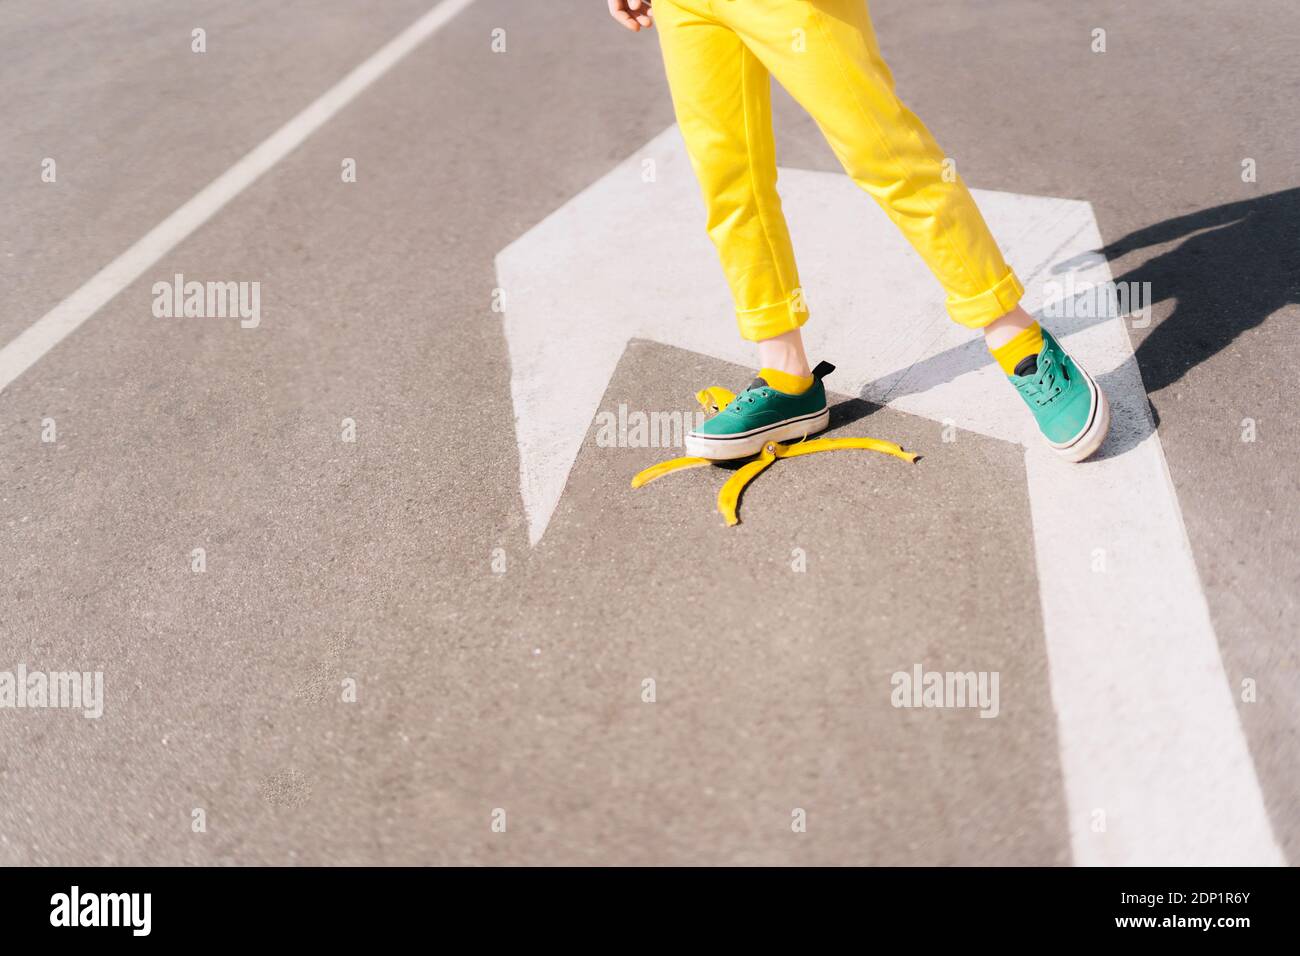 Girl stepping on banana peel on a street Stock Photo